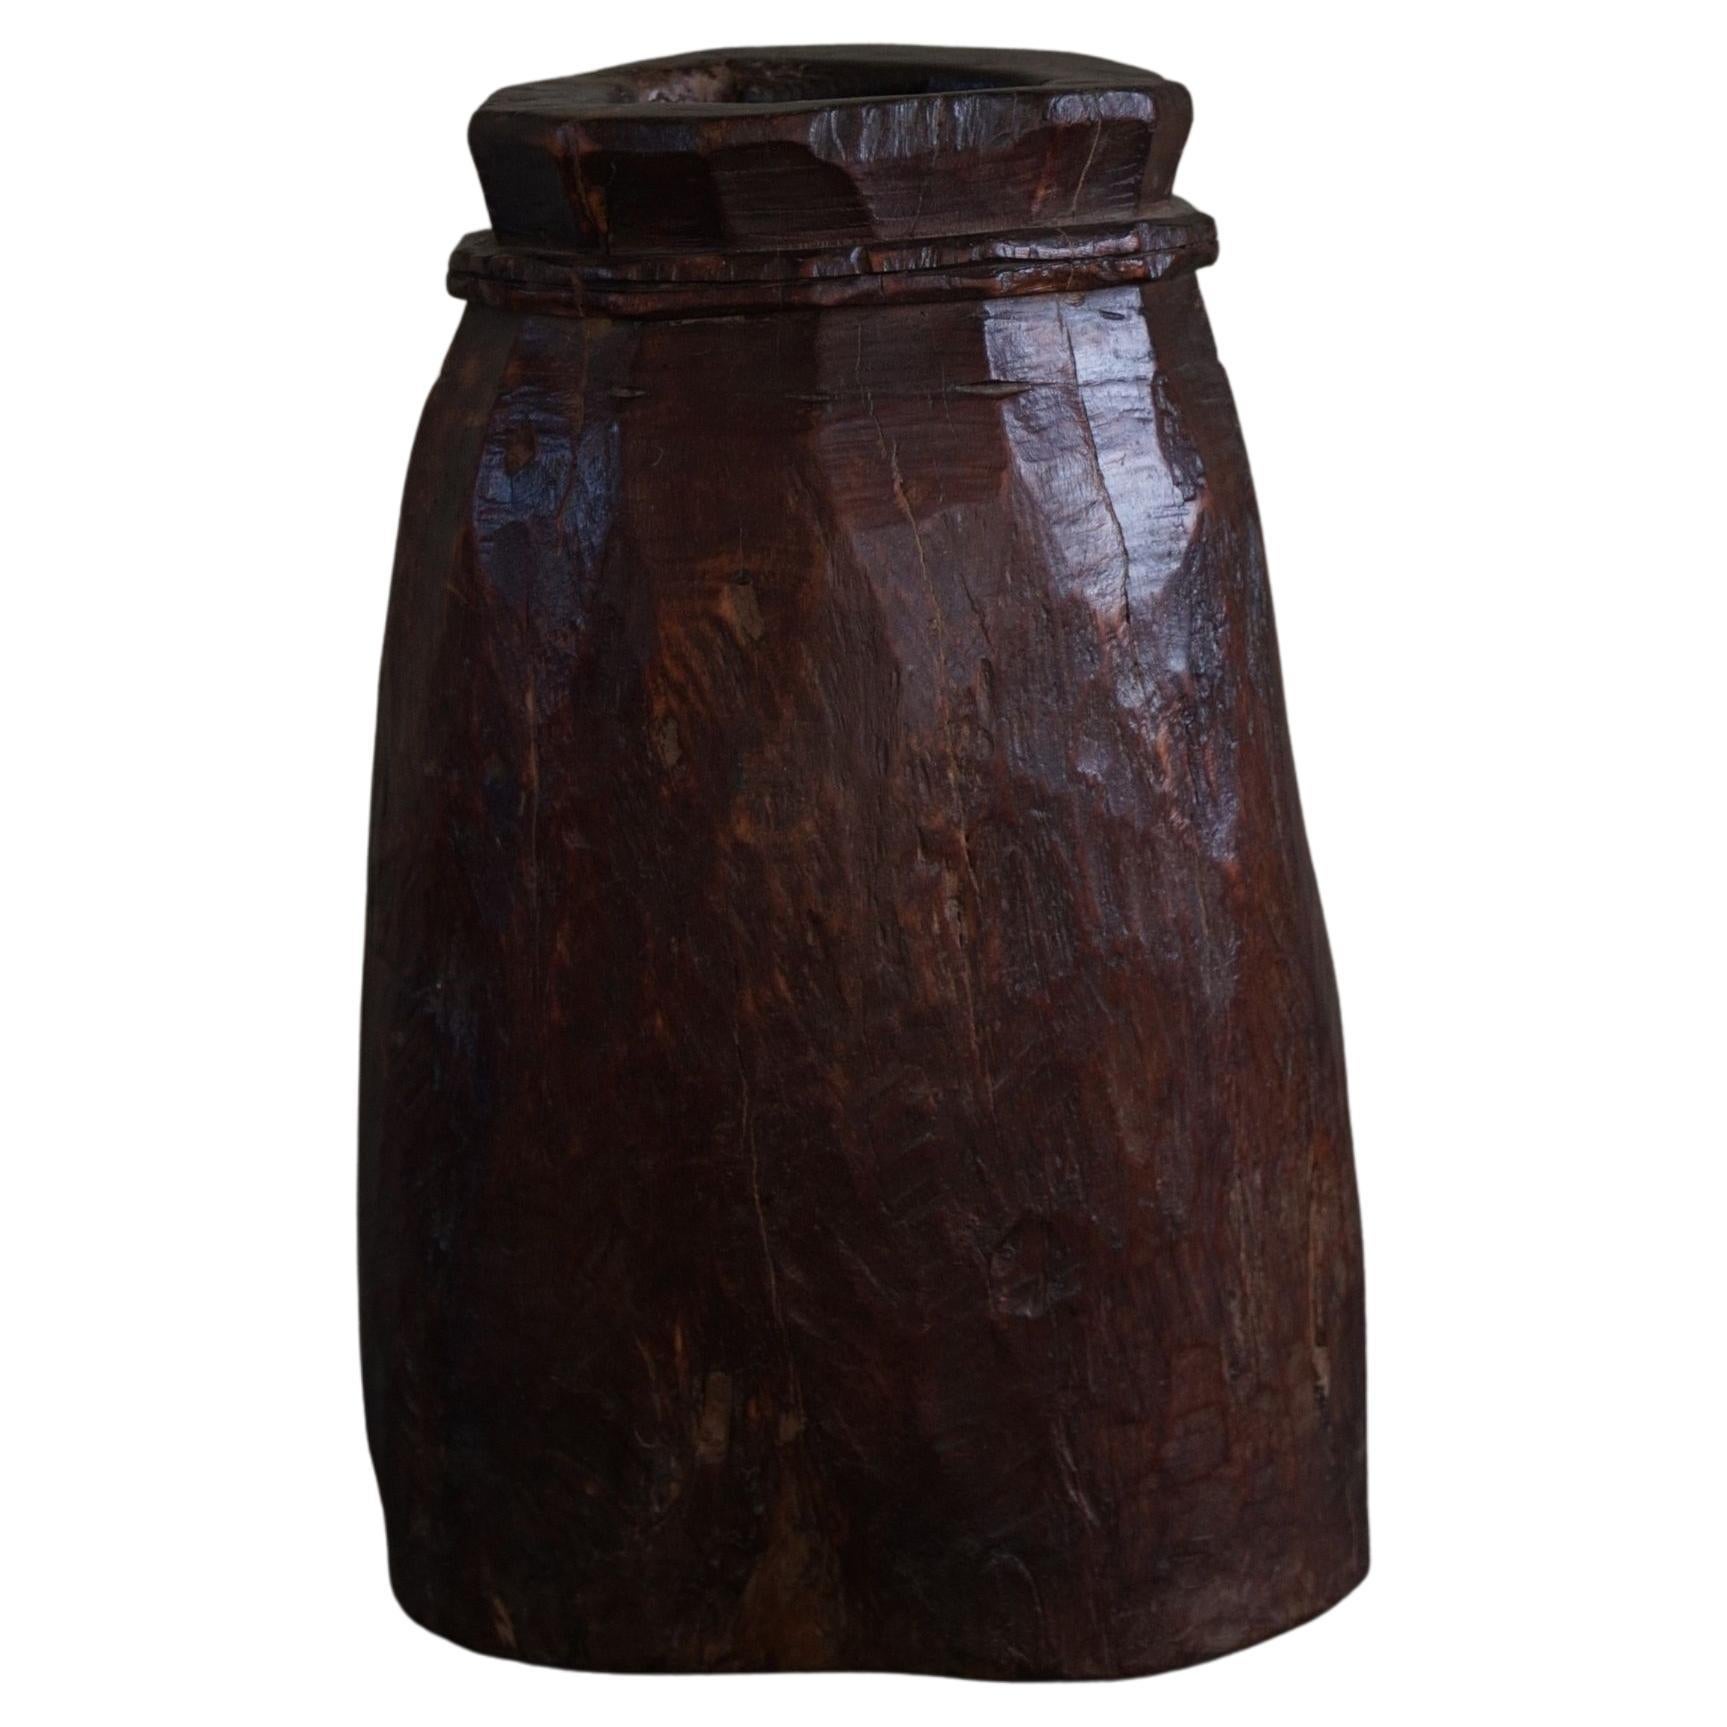 Primitive Organic Wooden Naga Pot in Teak, Wabi Sabi Style, 20th Century